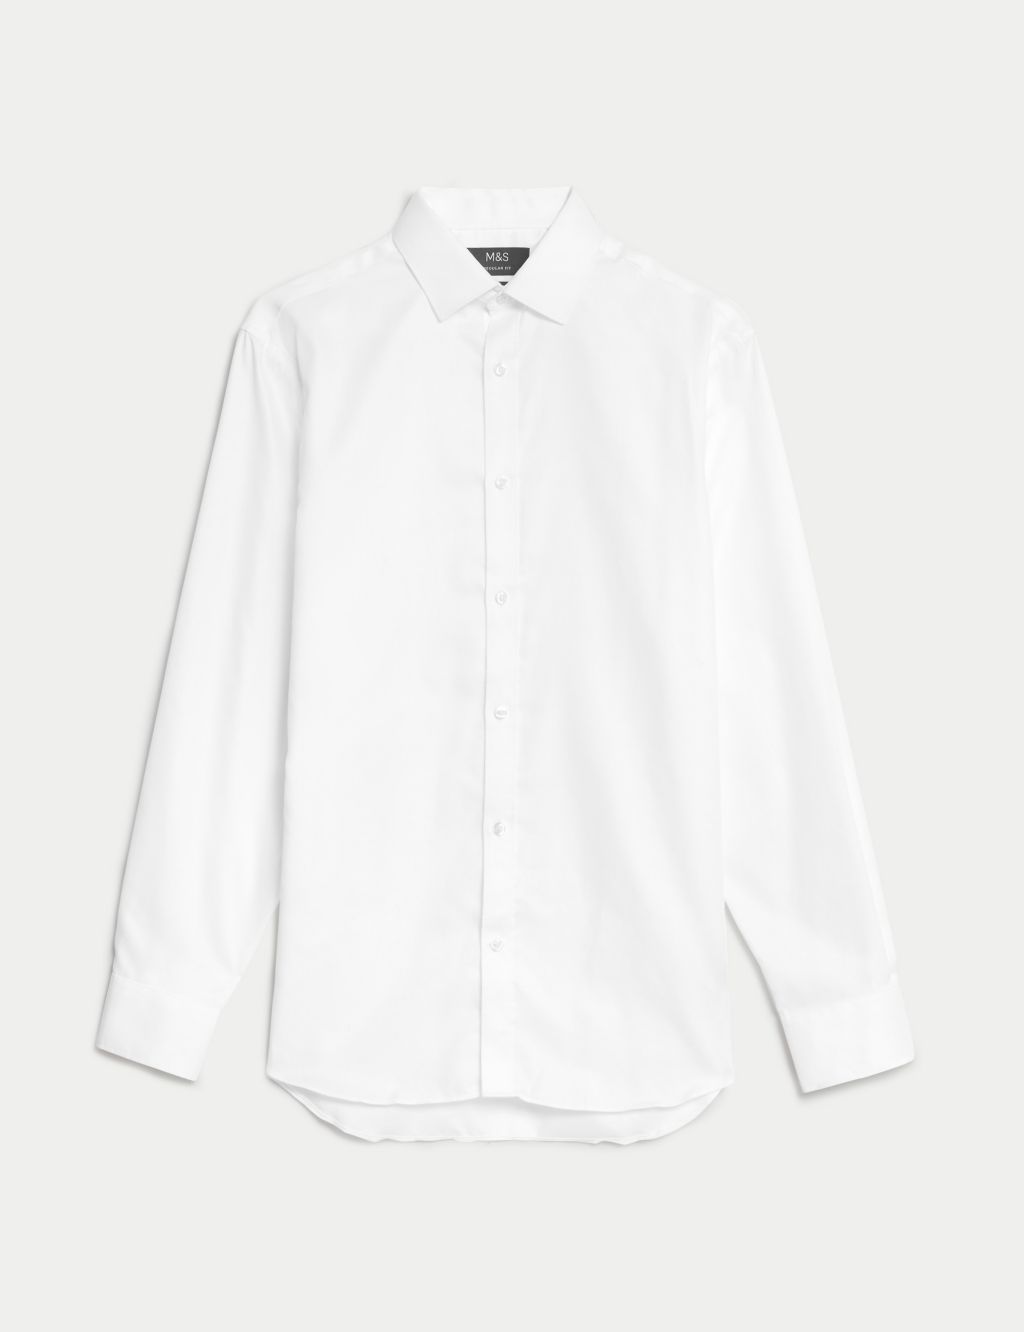 Regular Fit Pure Cotton Textured Shirt image 2